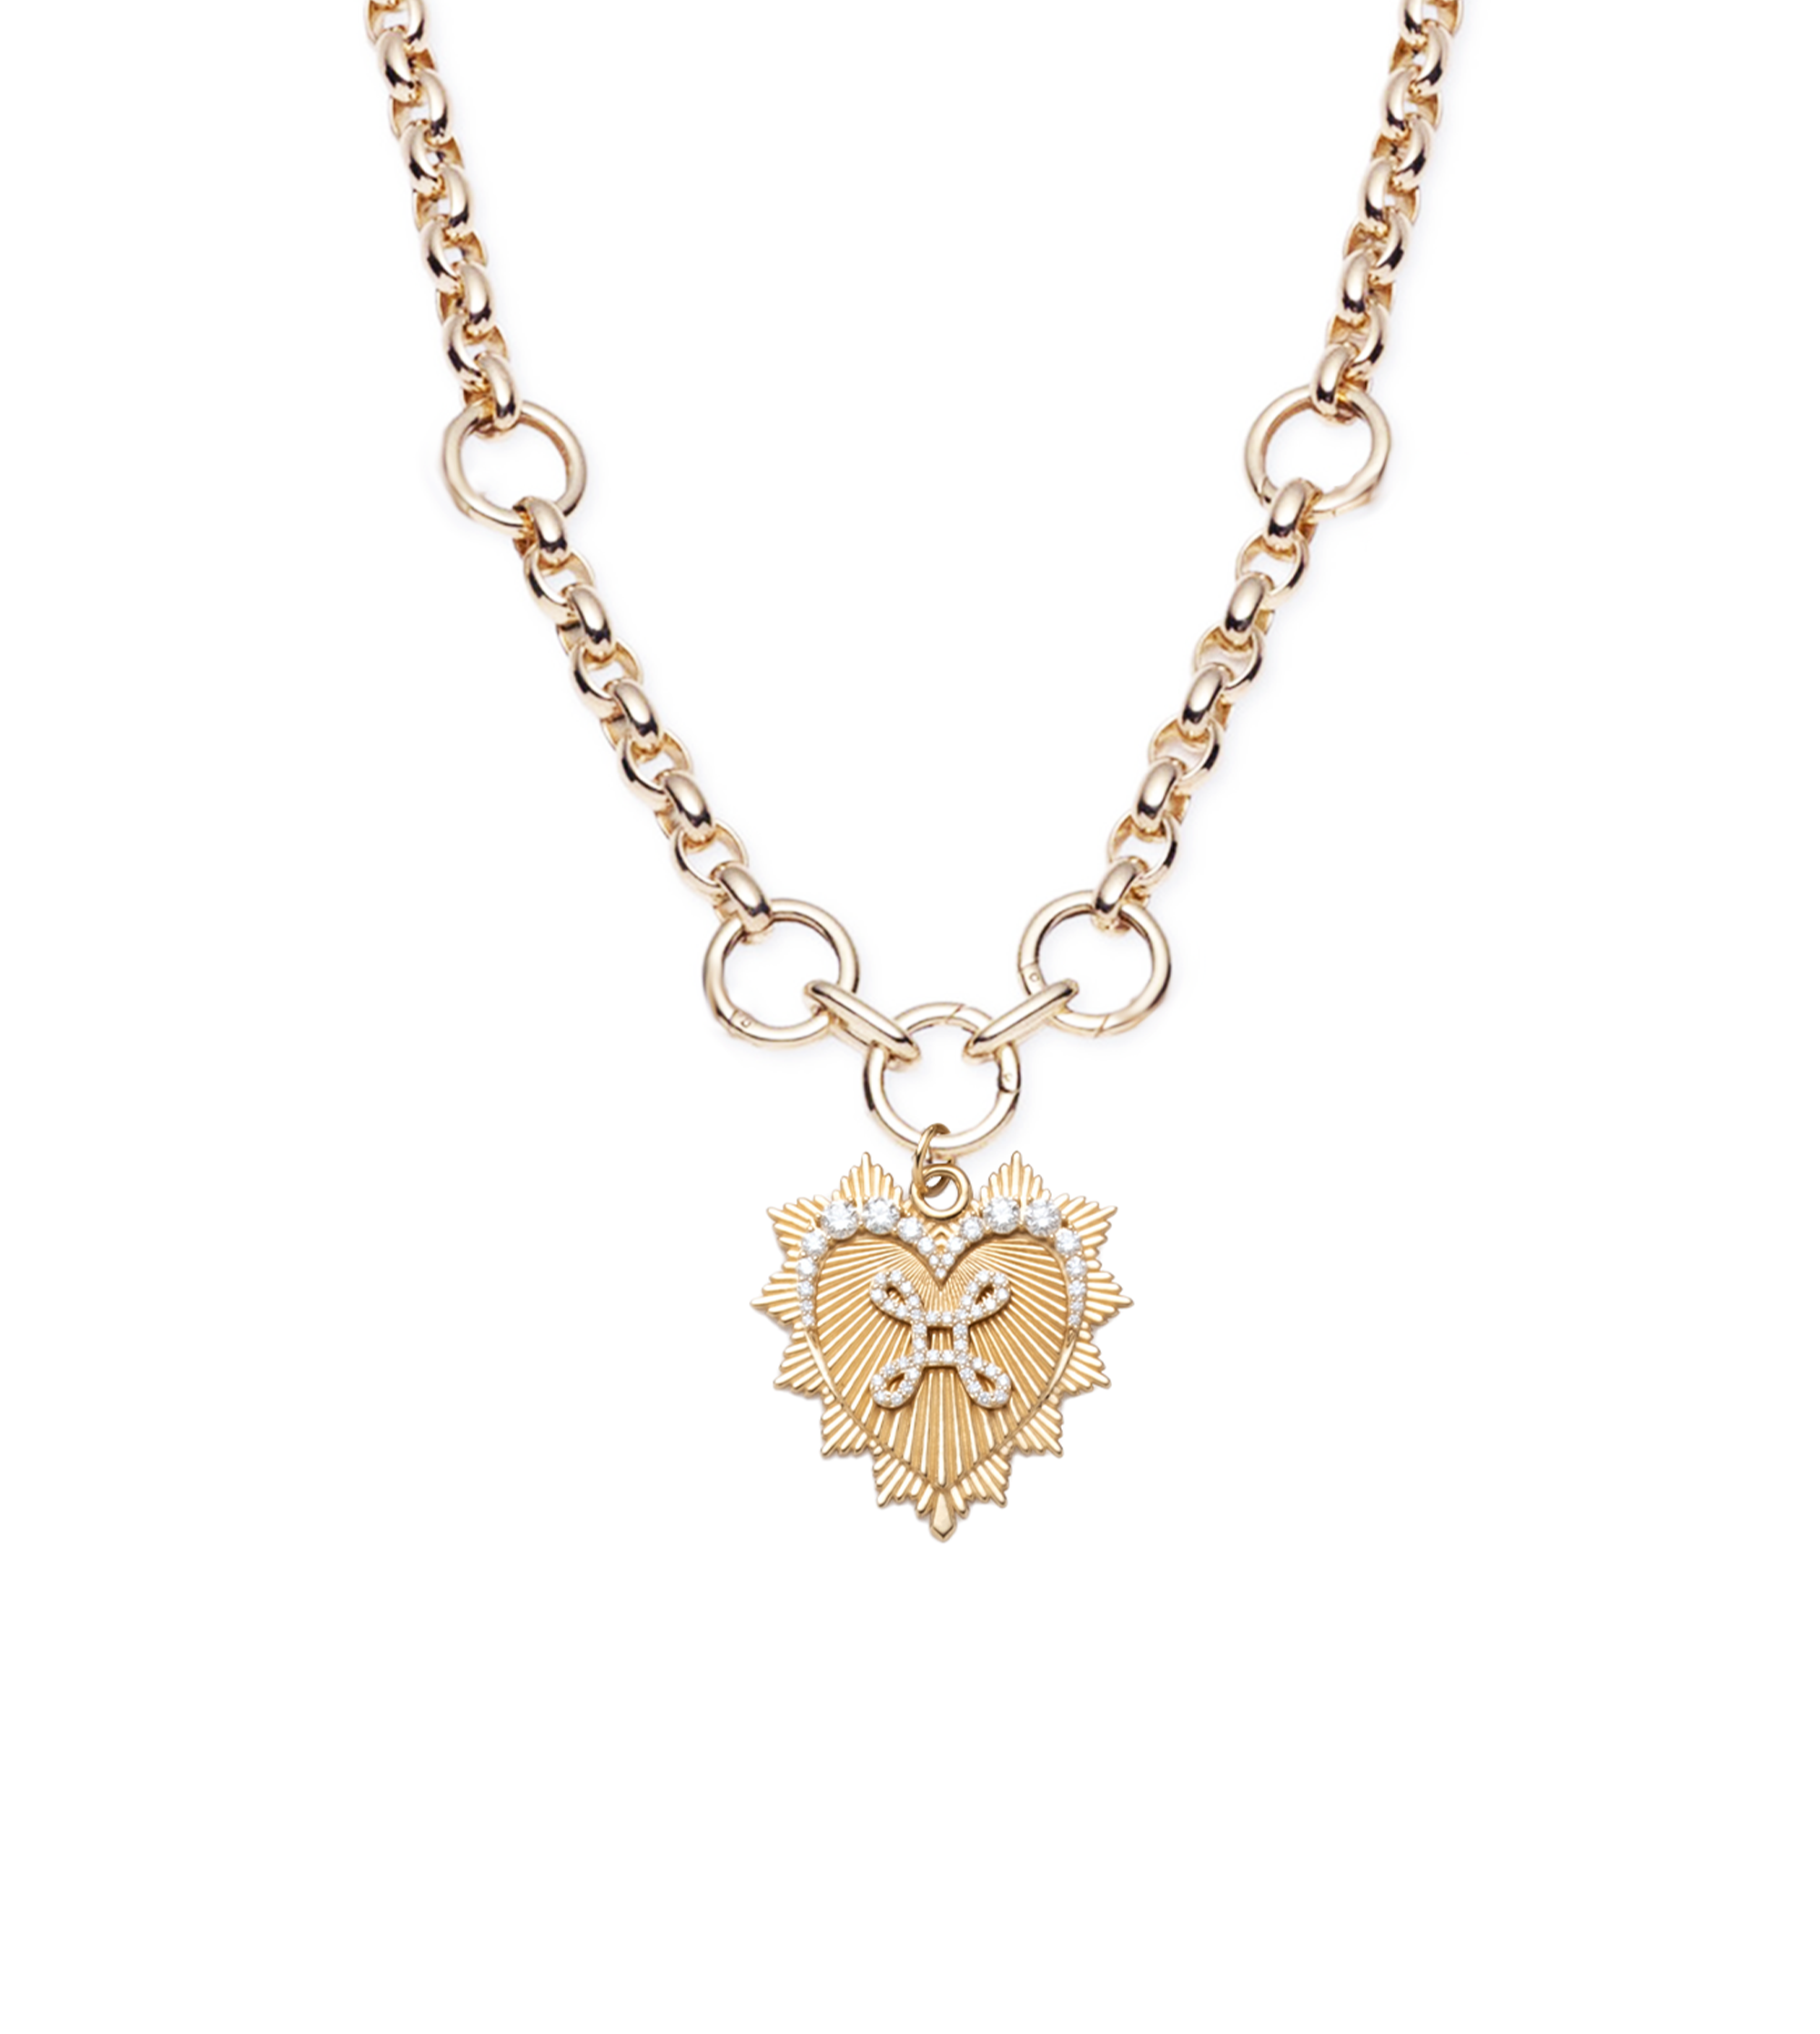 Love : Oversized Belcher Chain Necklace